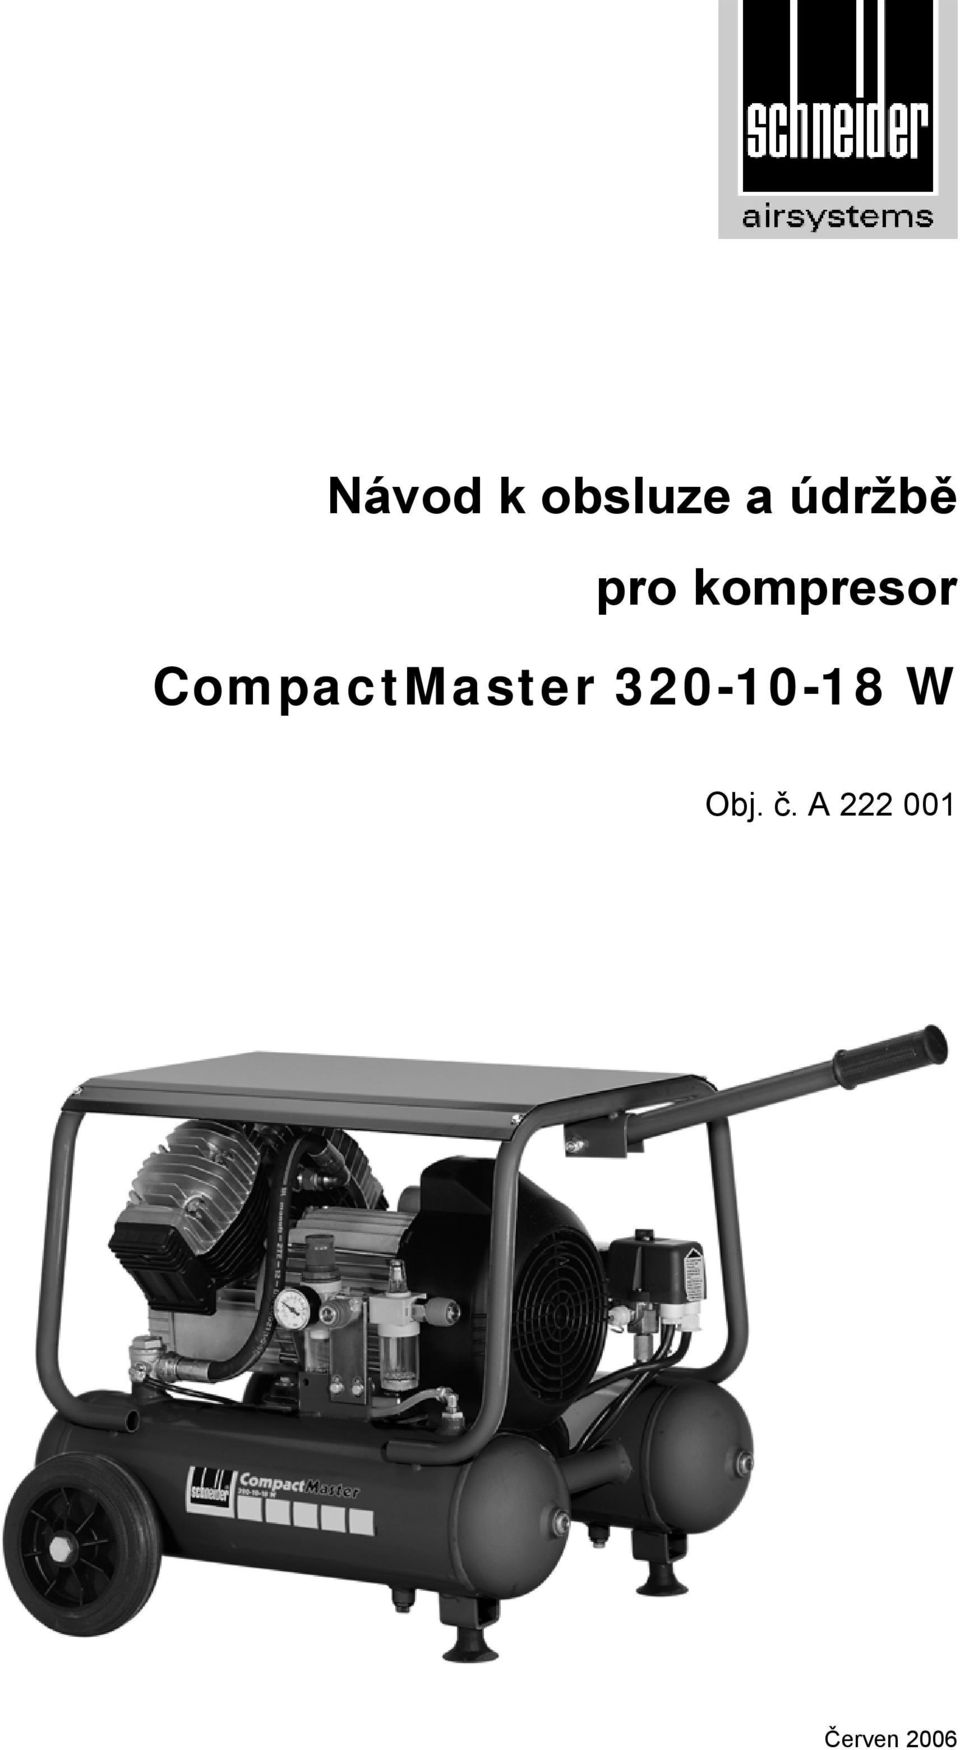 CompactMaster 320-10-18